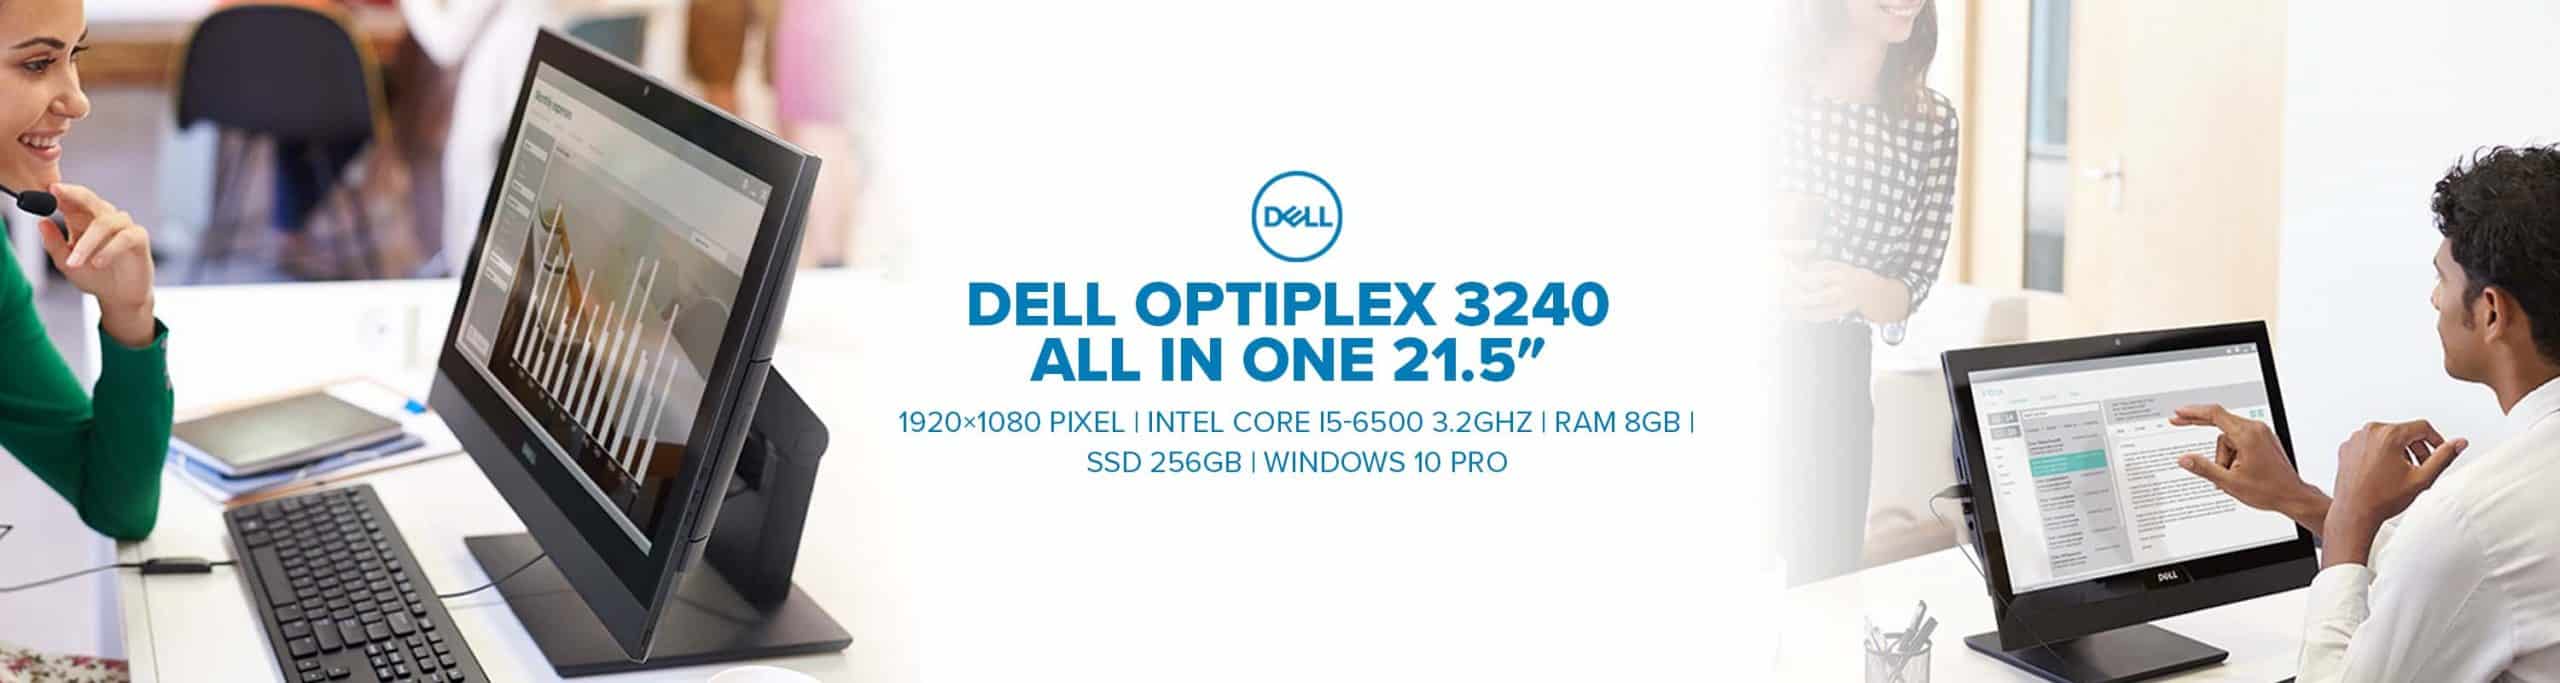 DELL OptiPlex 3240 All In One